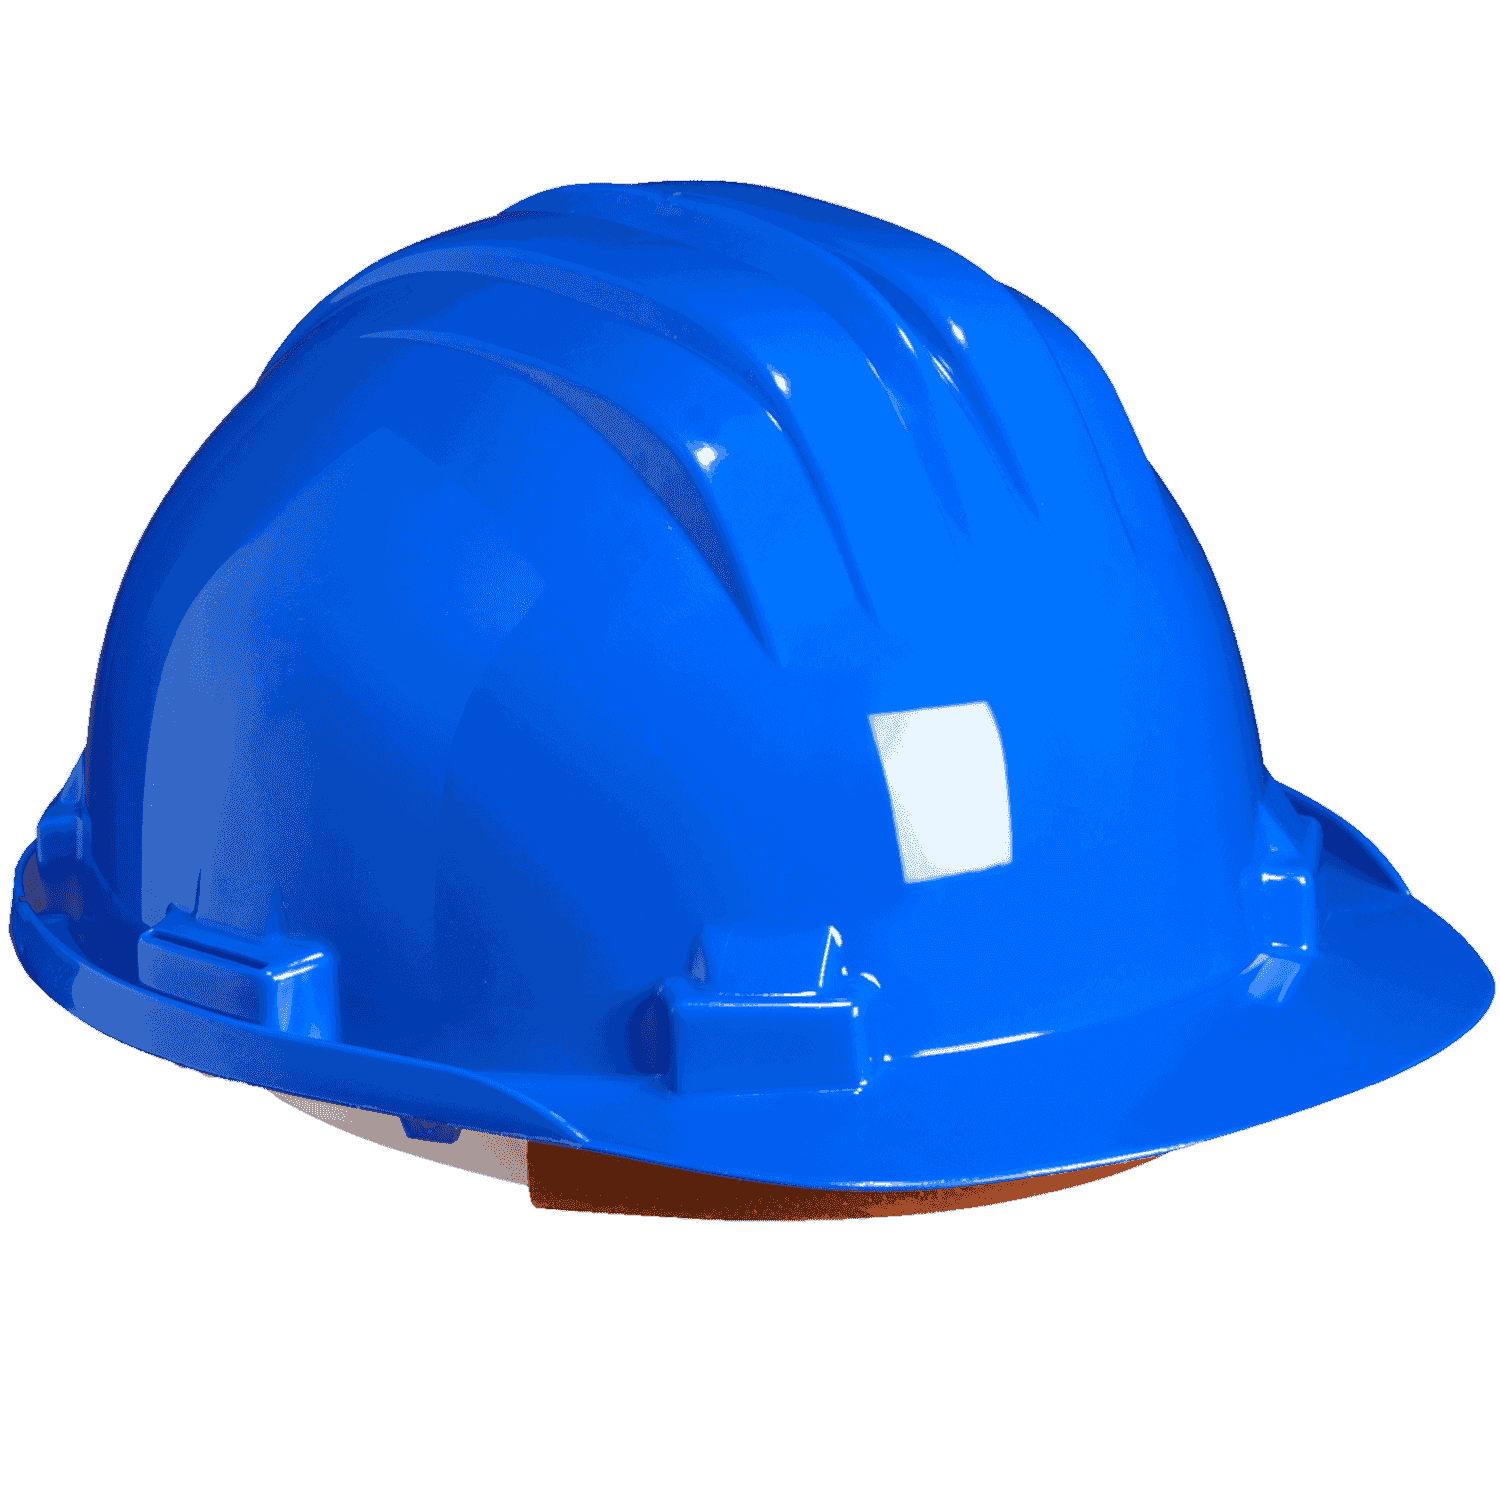 Climax 5-RS Manual Adjustment Safety Helmet Blue